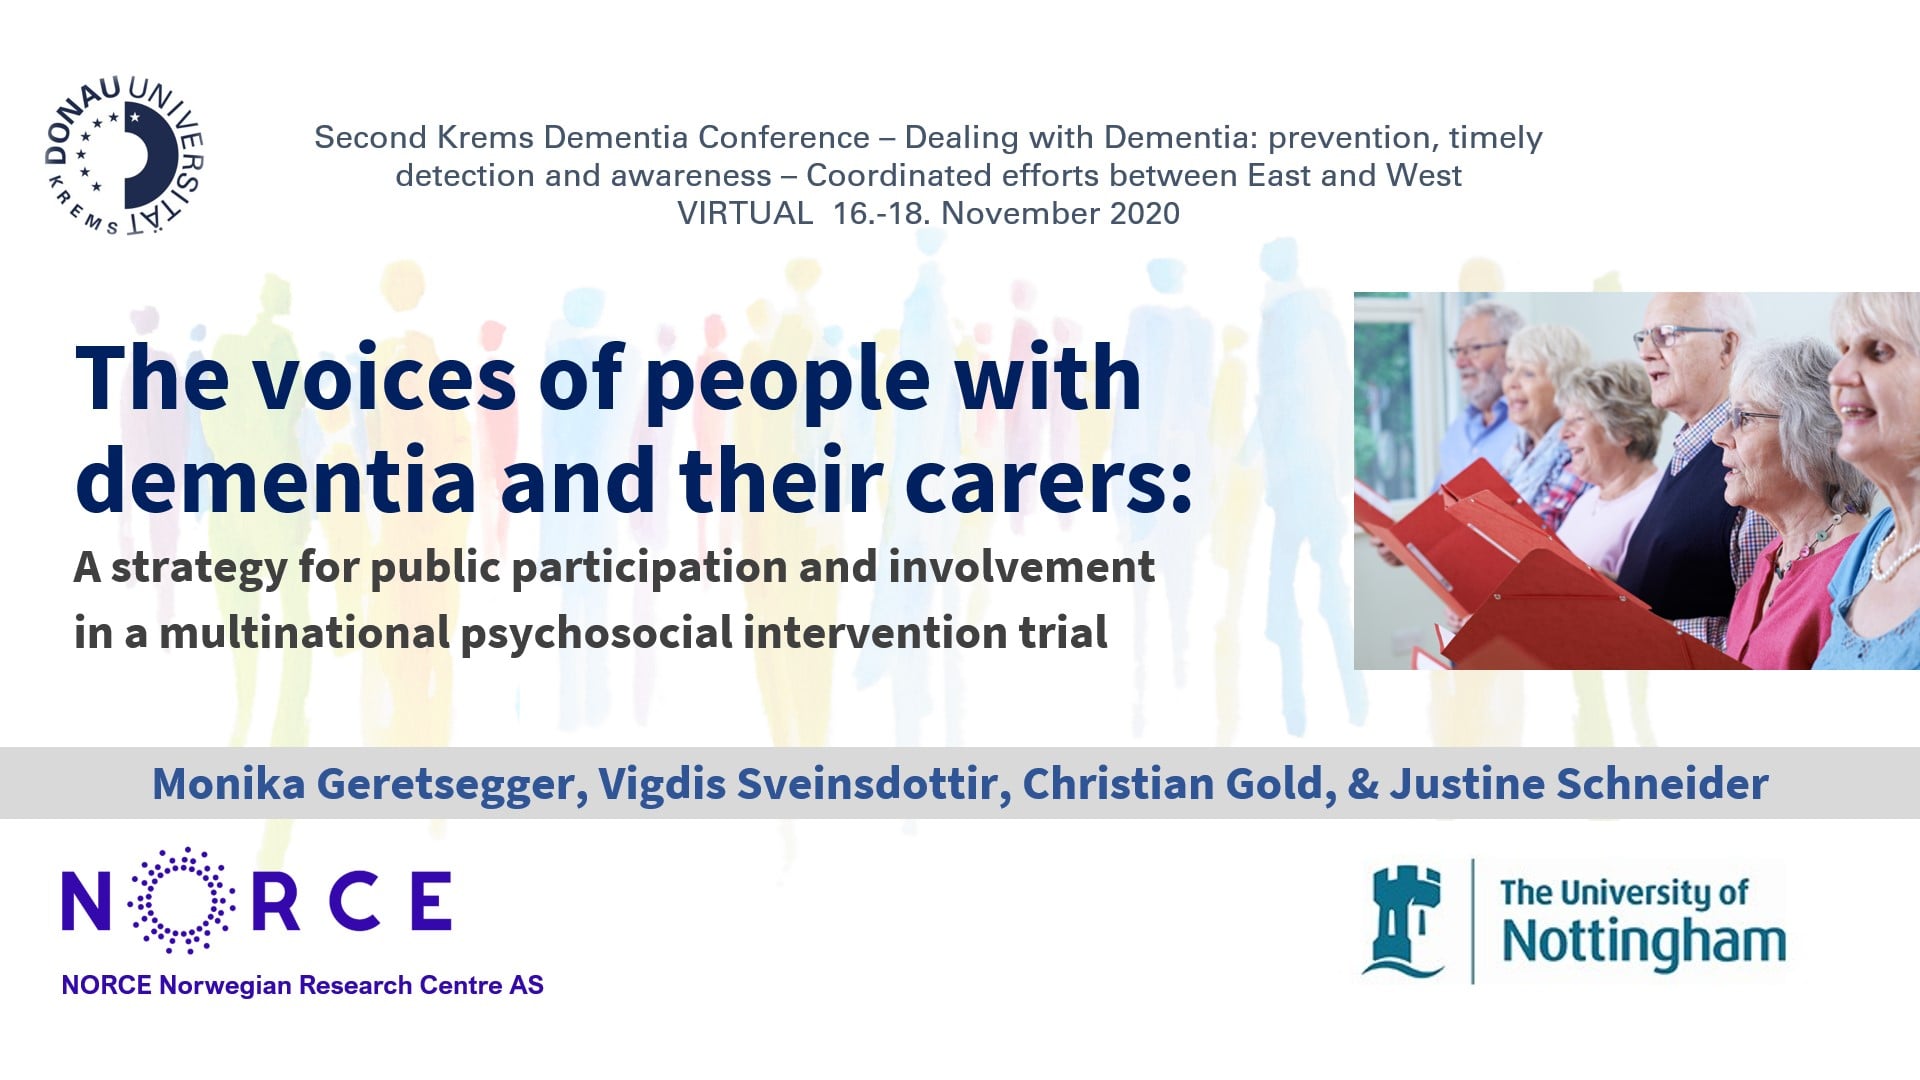 Krems Dementia Conference 2020 - Geretsegger et al.